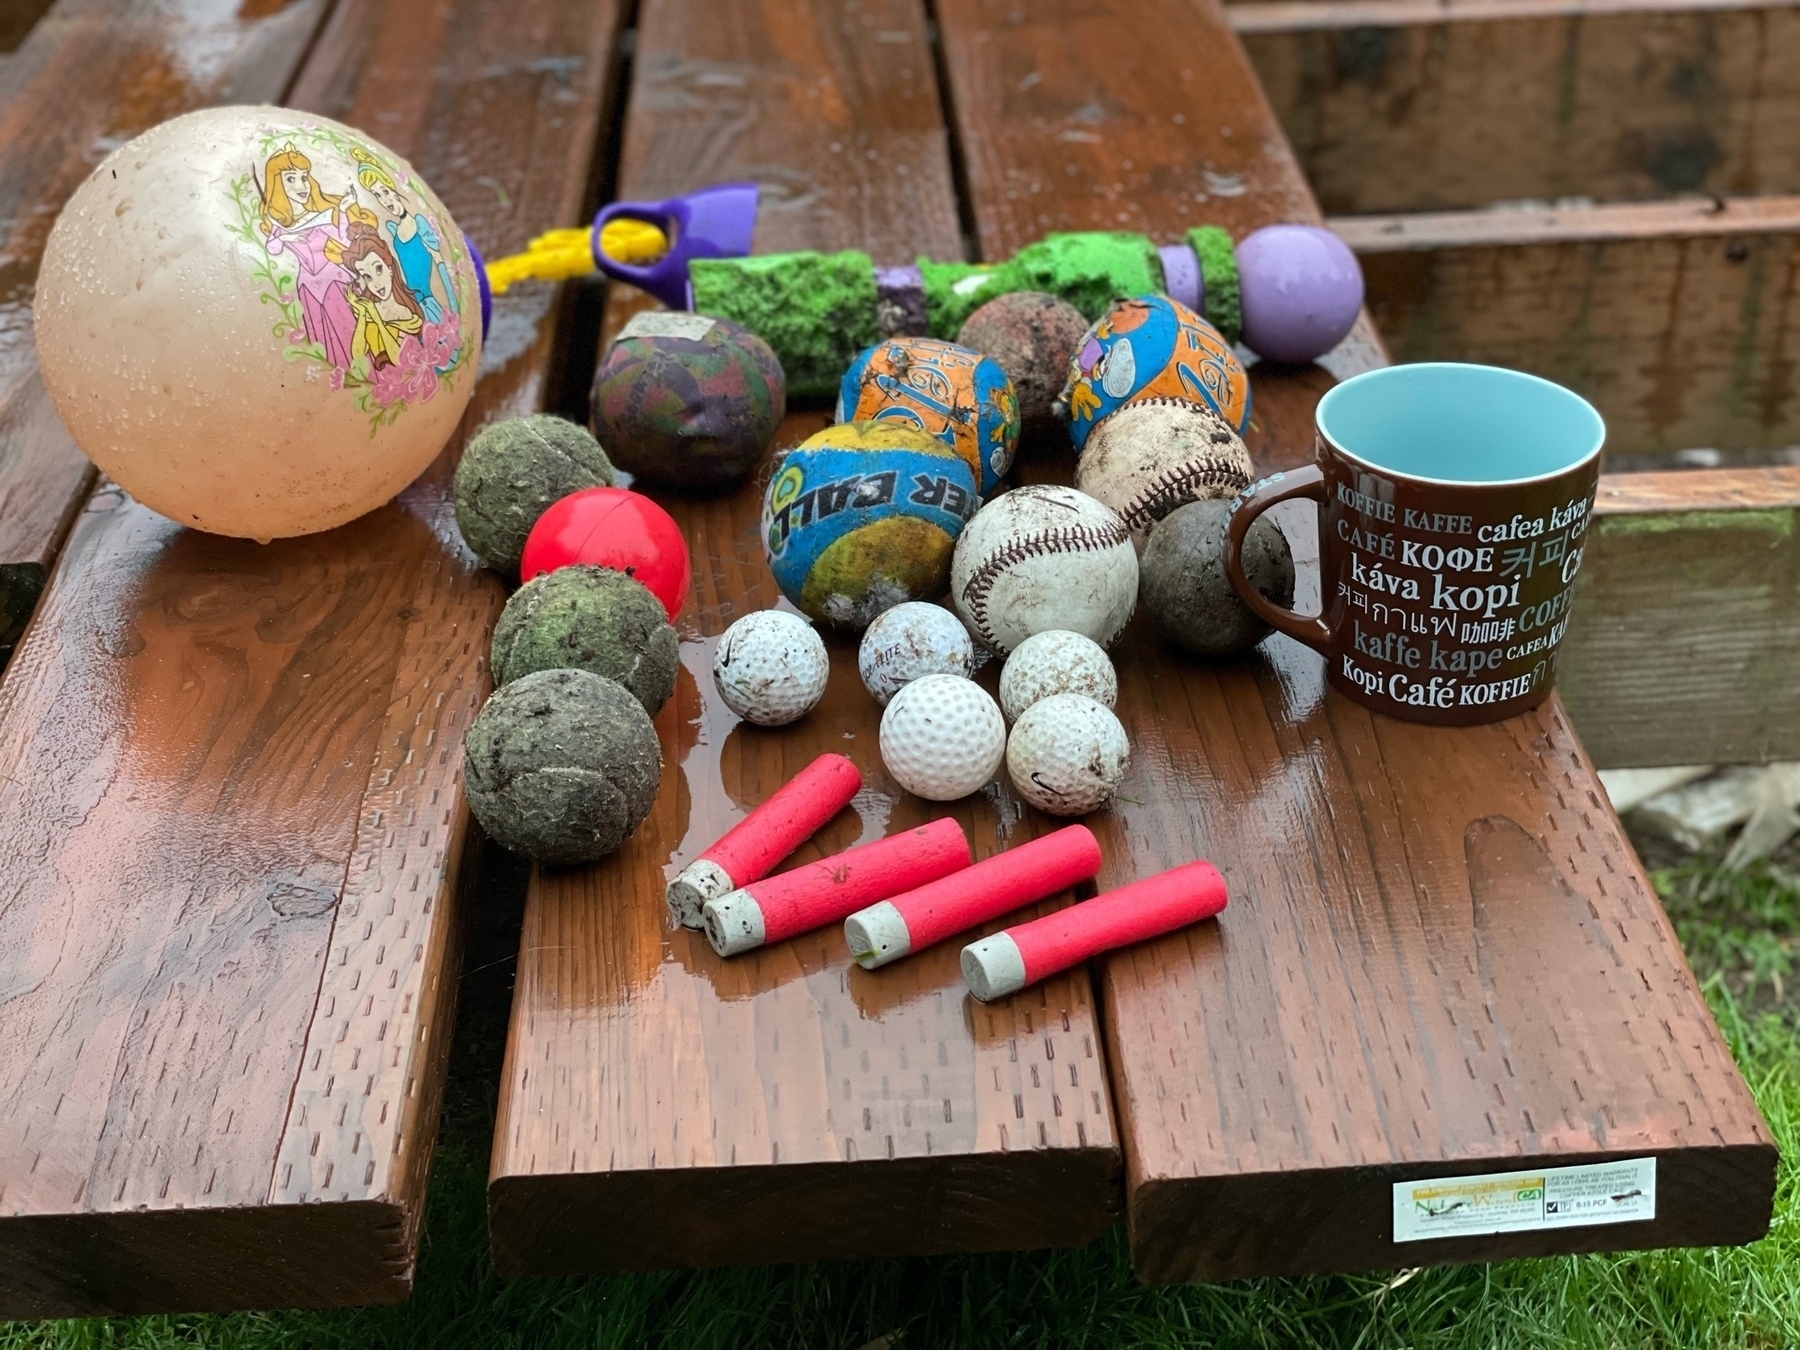 Various balls, bubble wands, Nerf darts, and a coffee mug